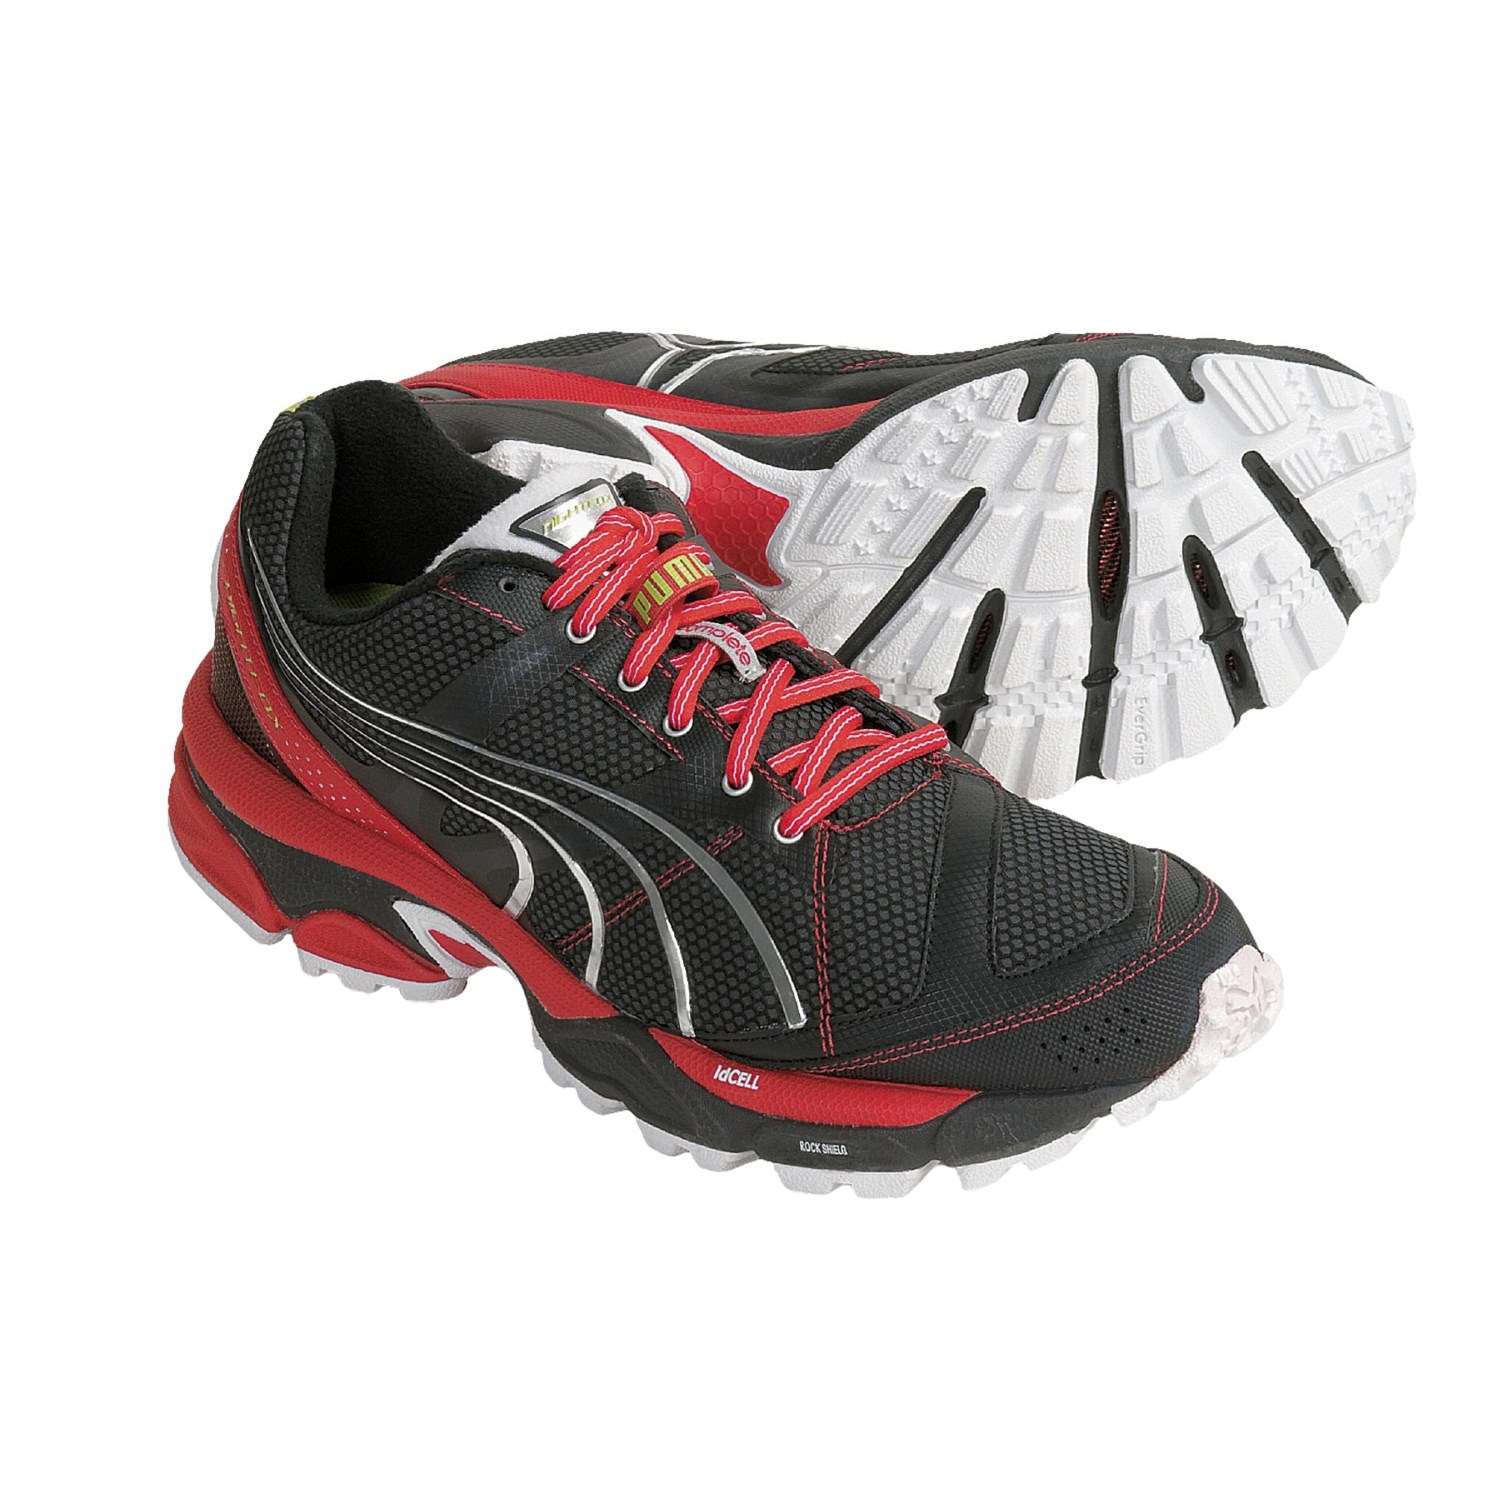 puma nightfox trail running shoes